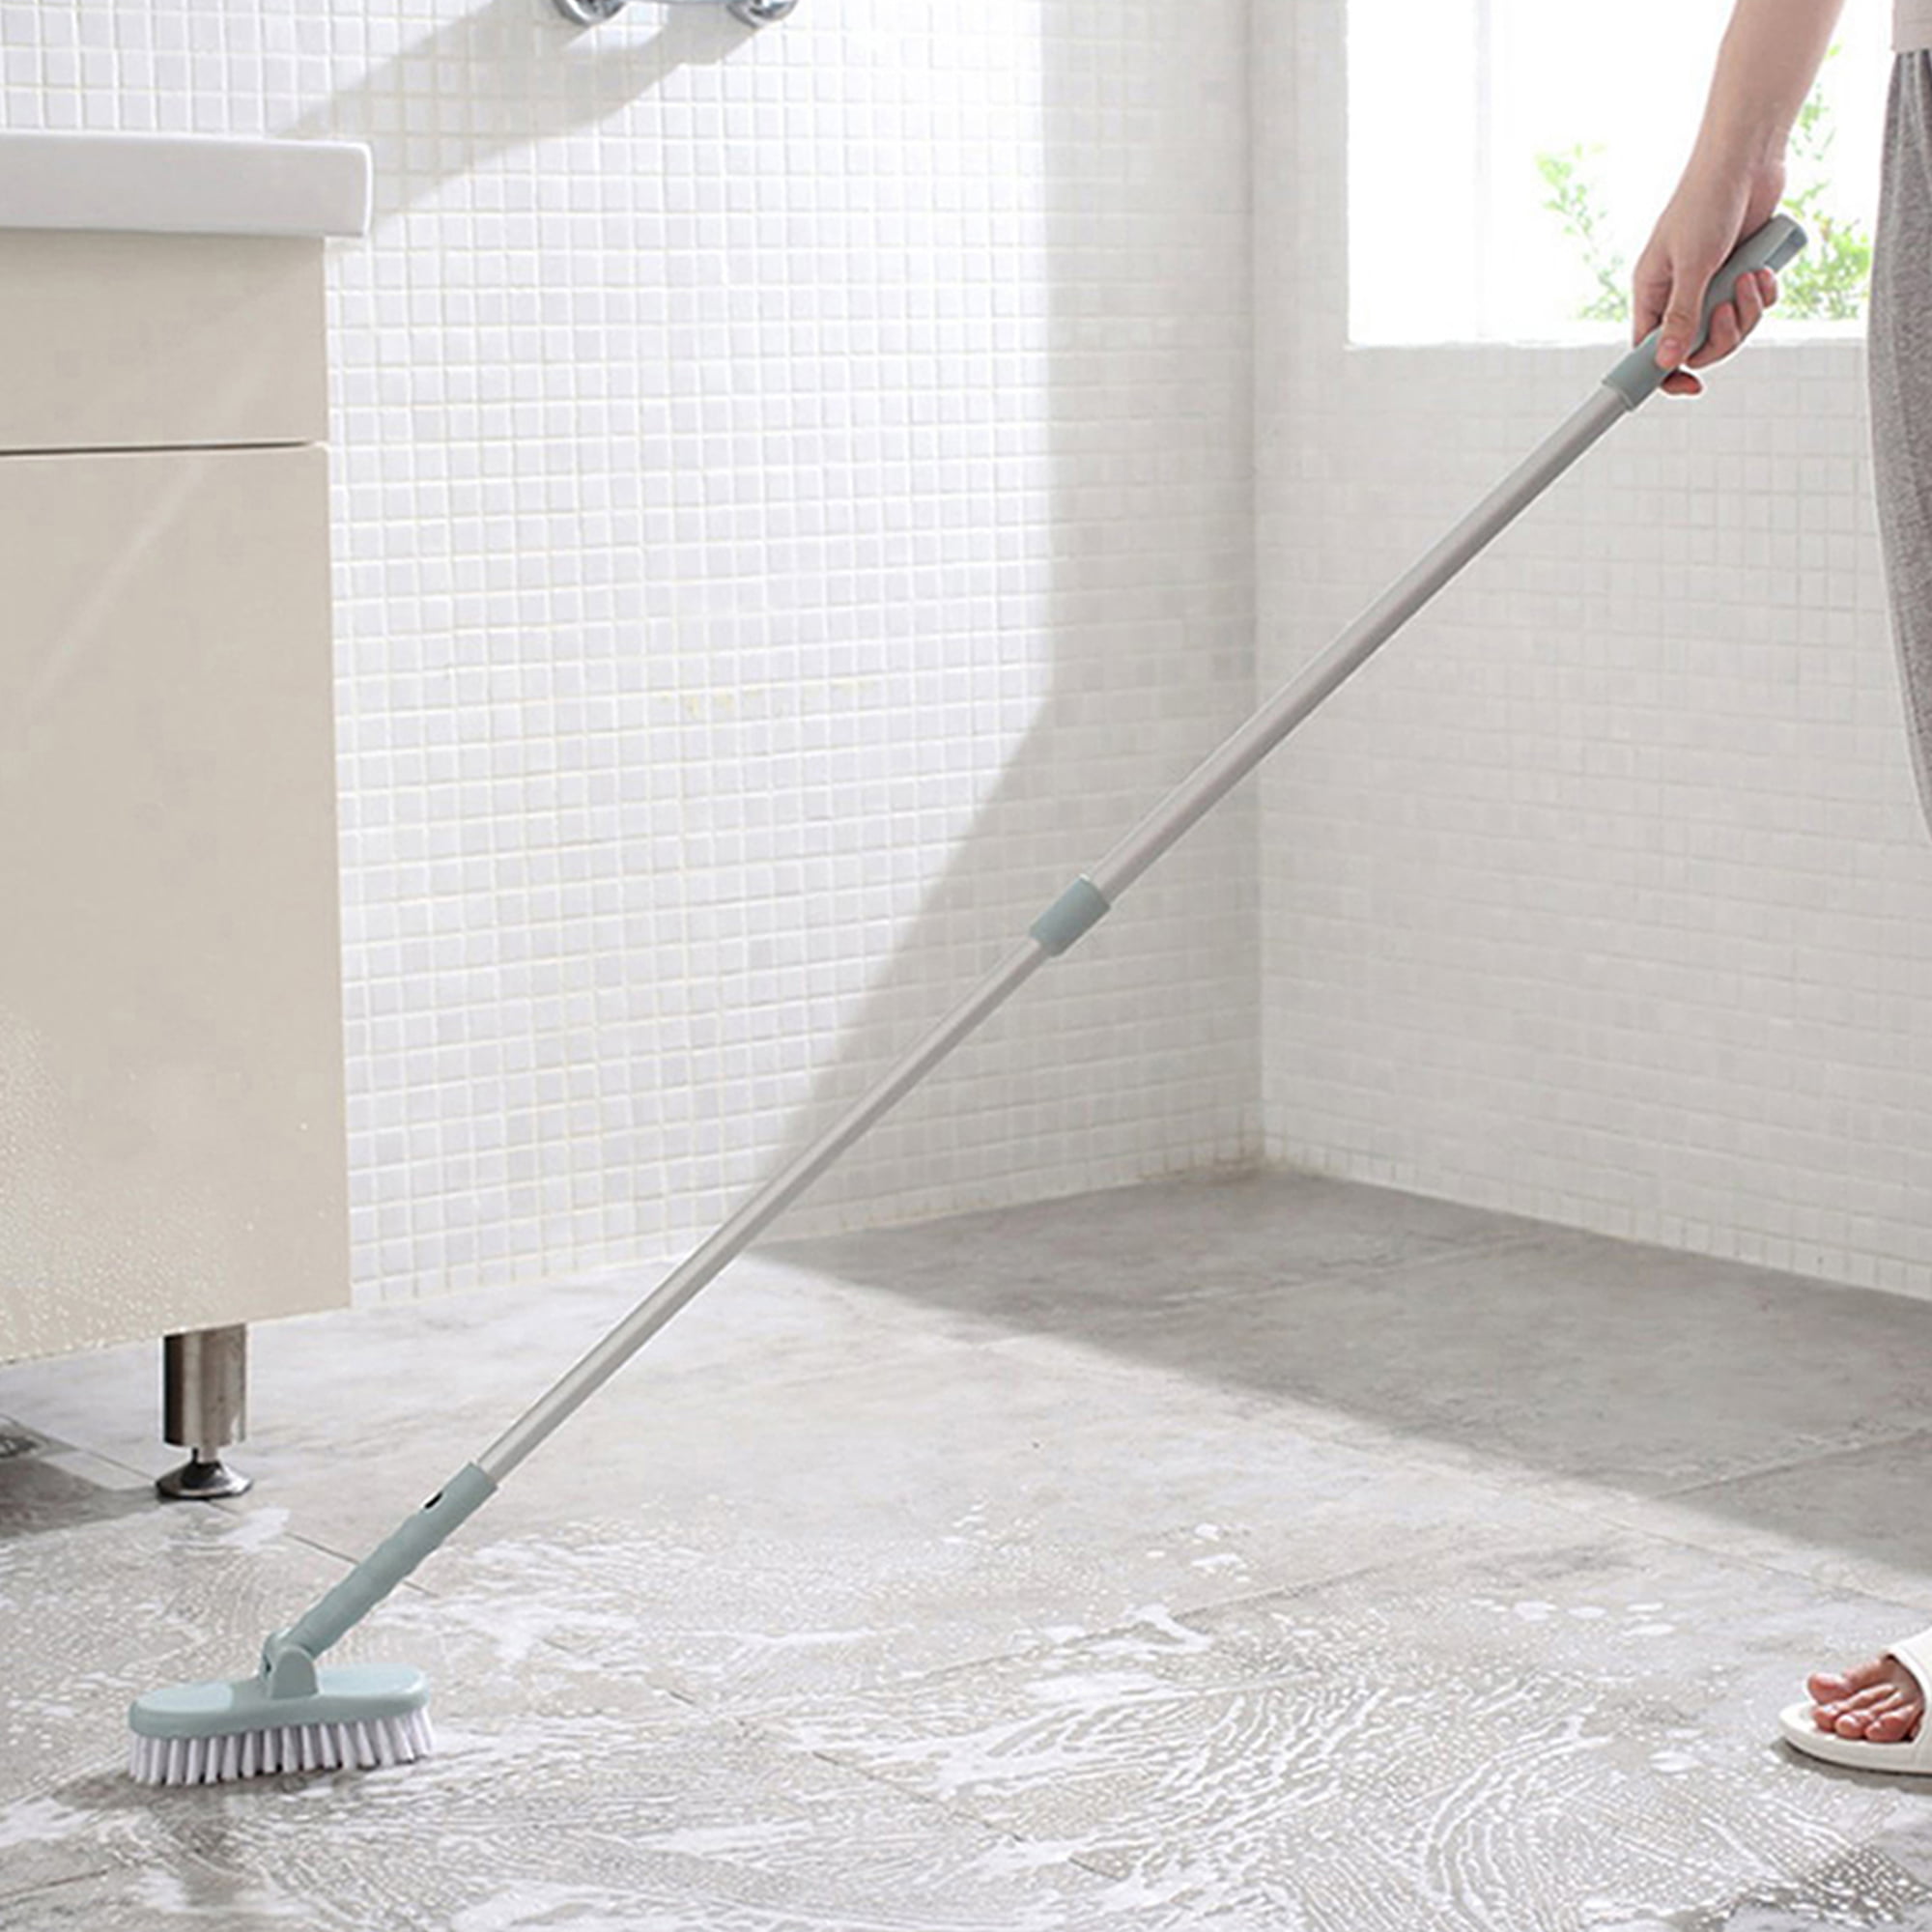 2 In 1 Bathroom Cleaning Brush – homettd